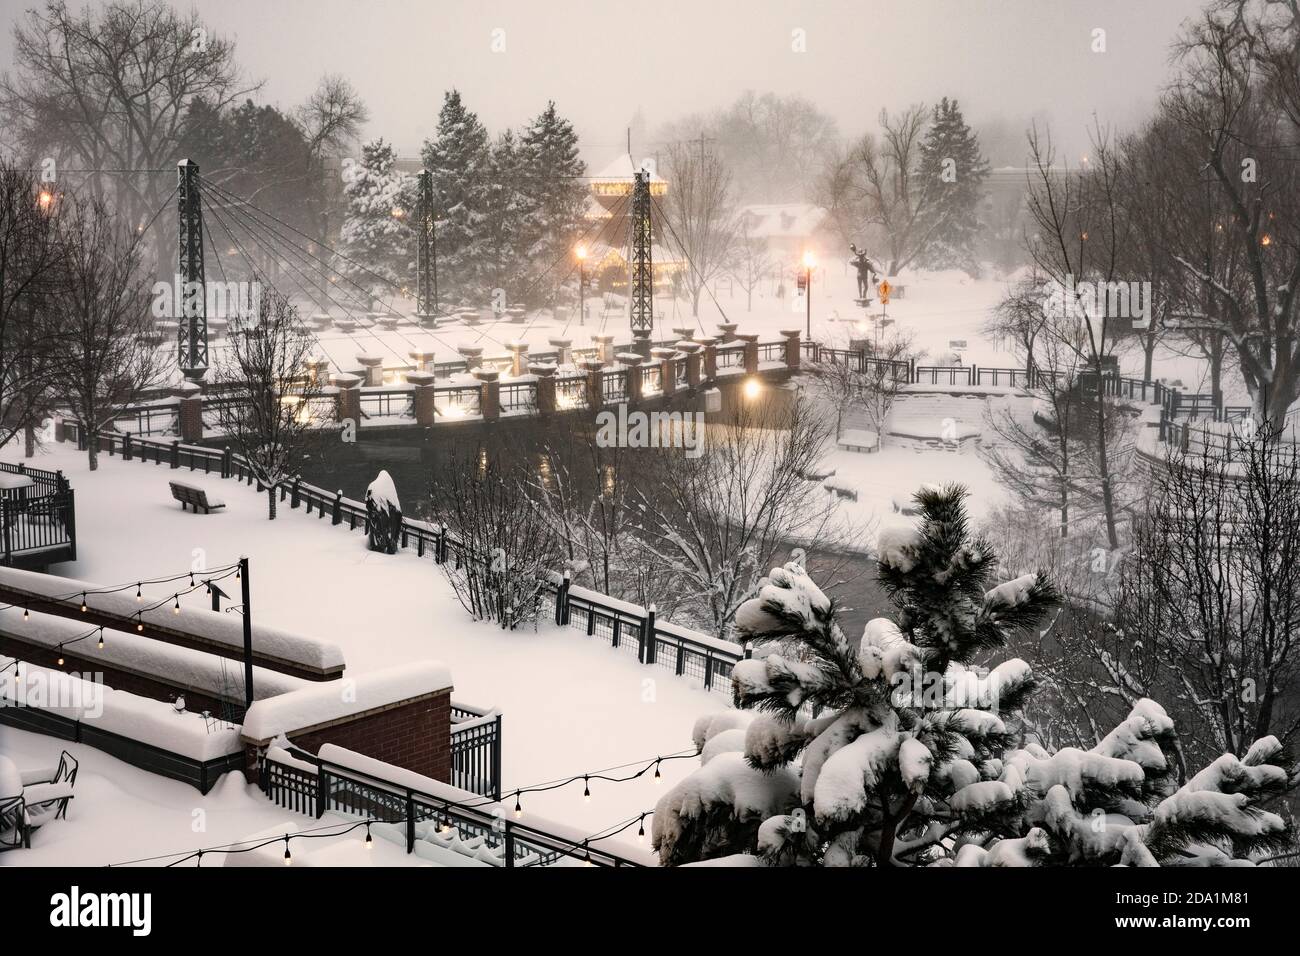 Vintage style image of Washington Avenue Bridge over Clear Creek in winter - Golden, Colorado, USA Stock Photo